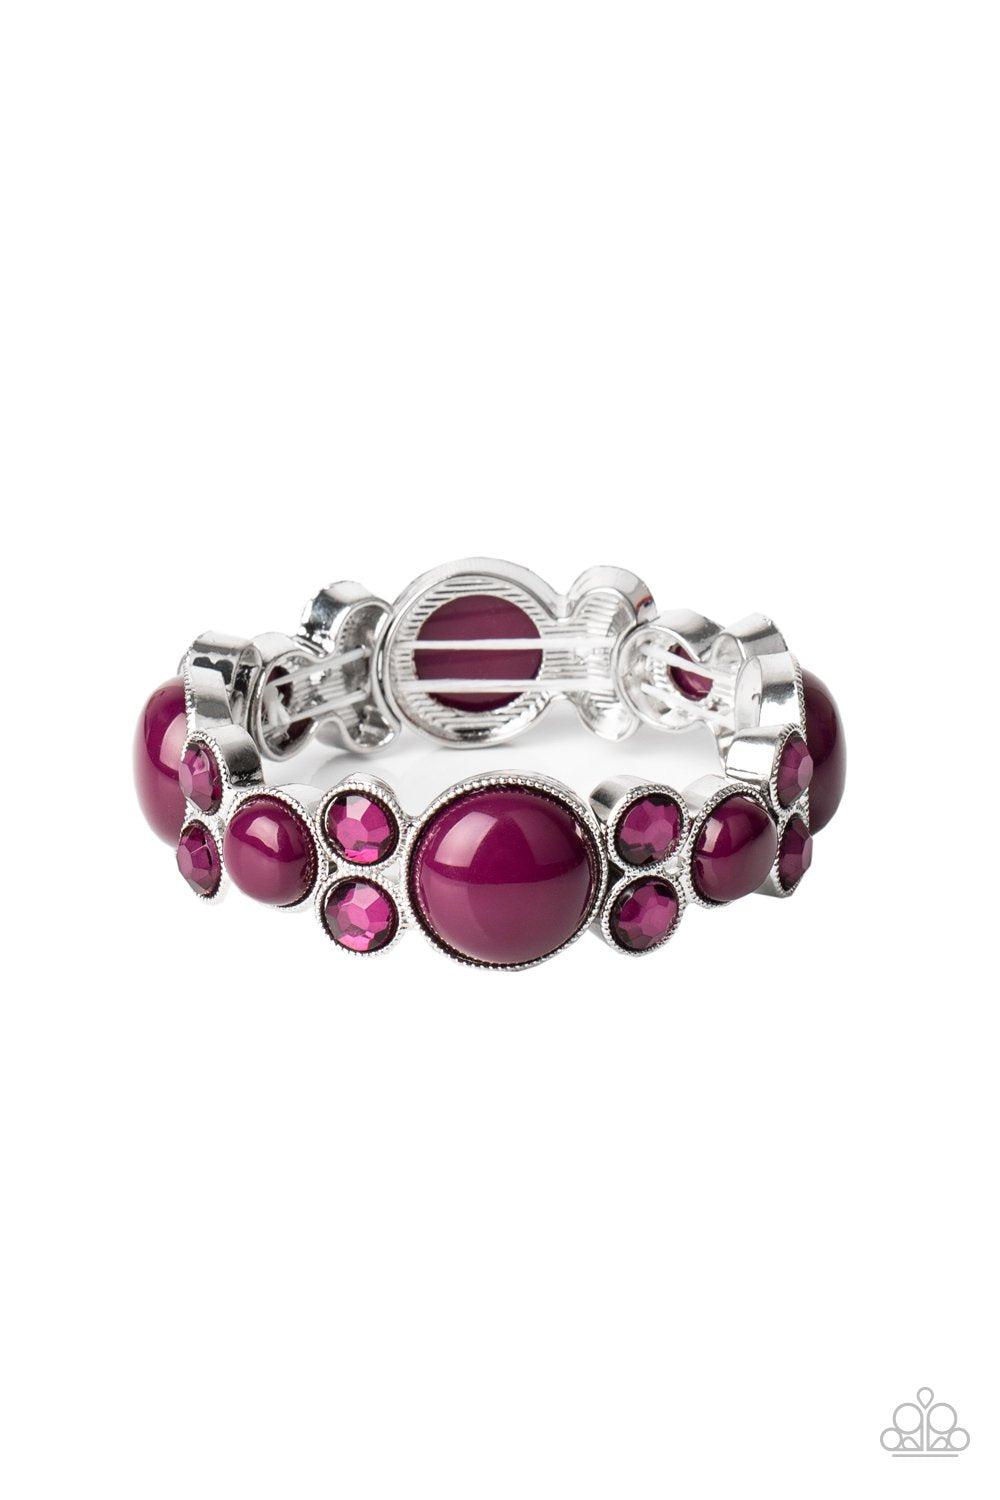 Celestial Escape Purple Rhinestone and Bead Bracelet - Paparazzi Accessories - lightbox -CarasShop.com - $5 Jewelry by Cara Jewels